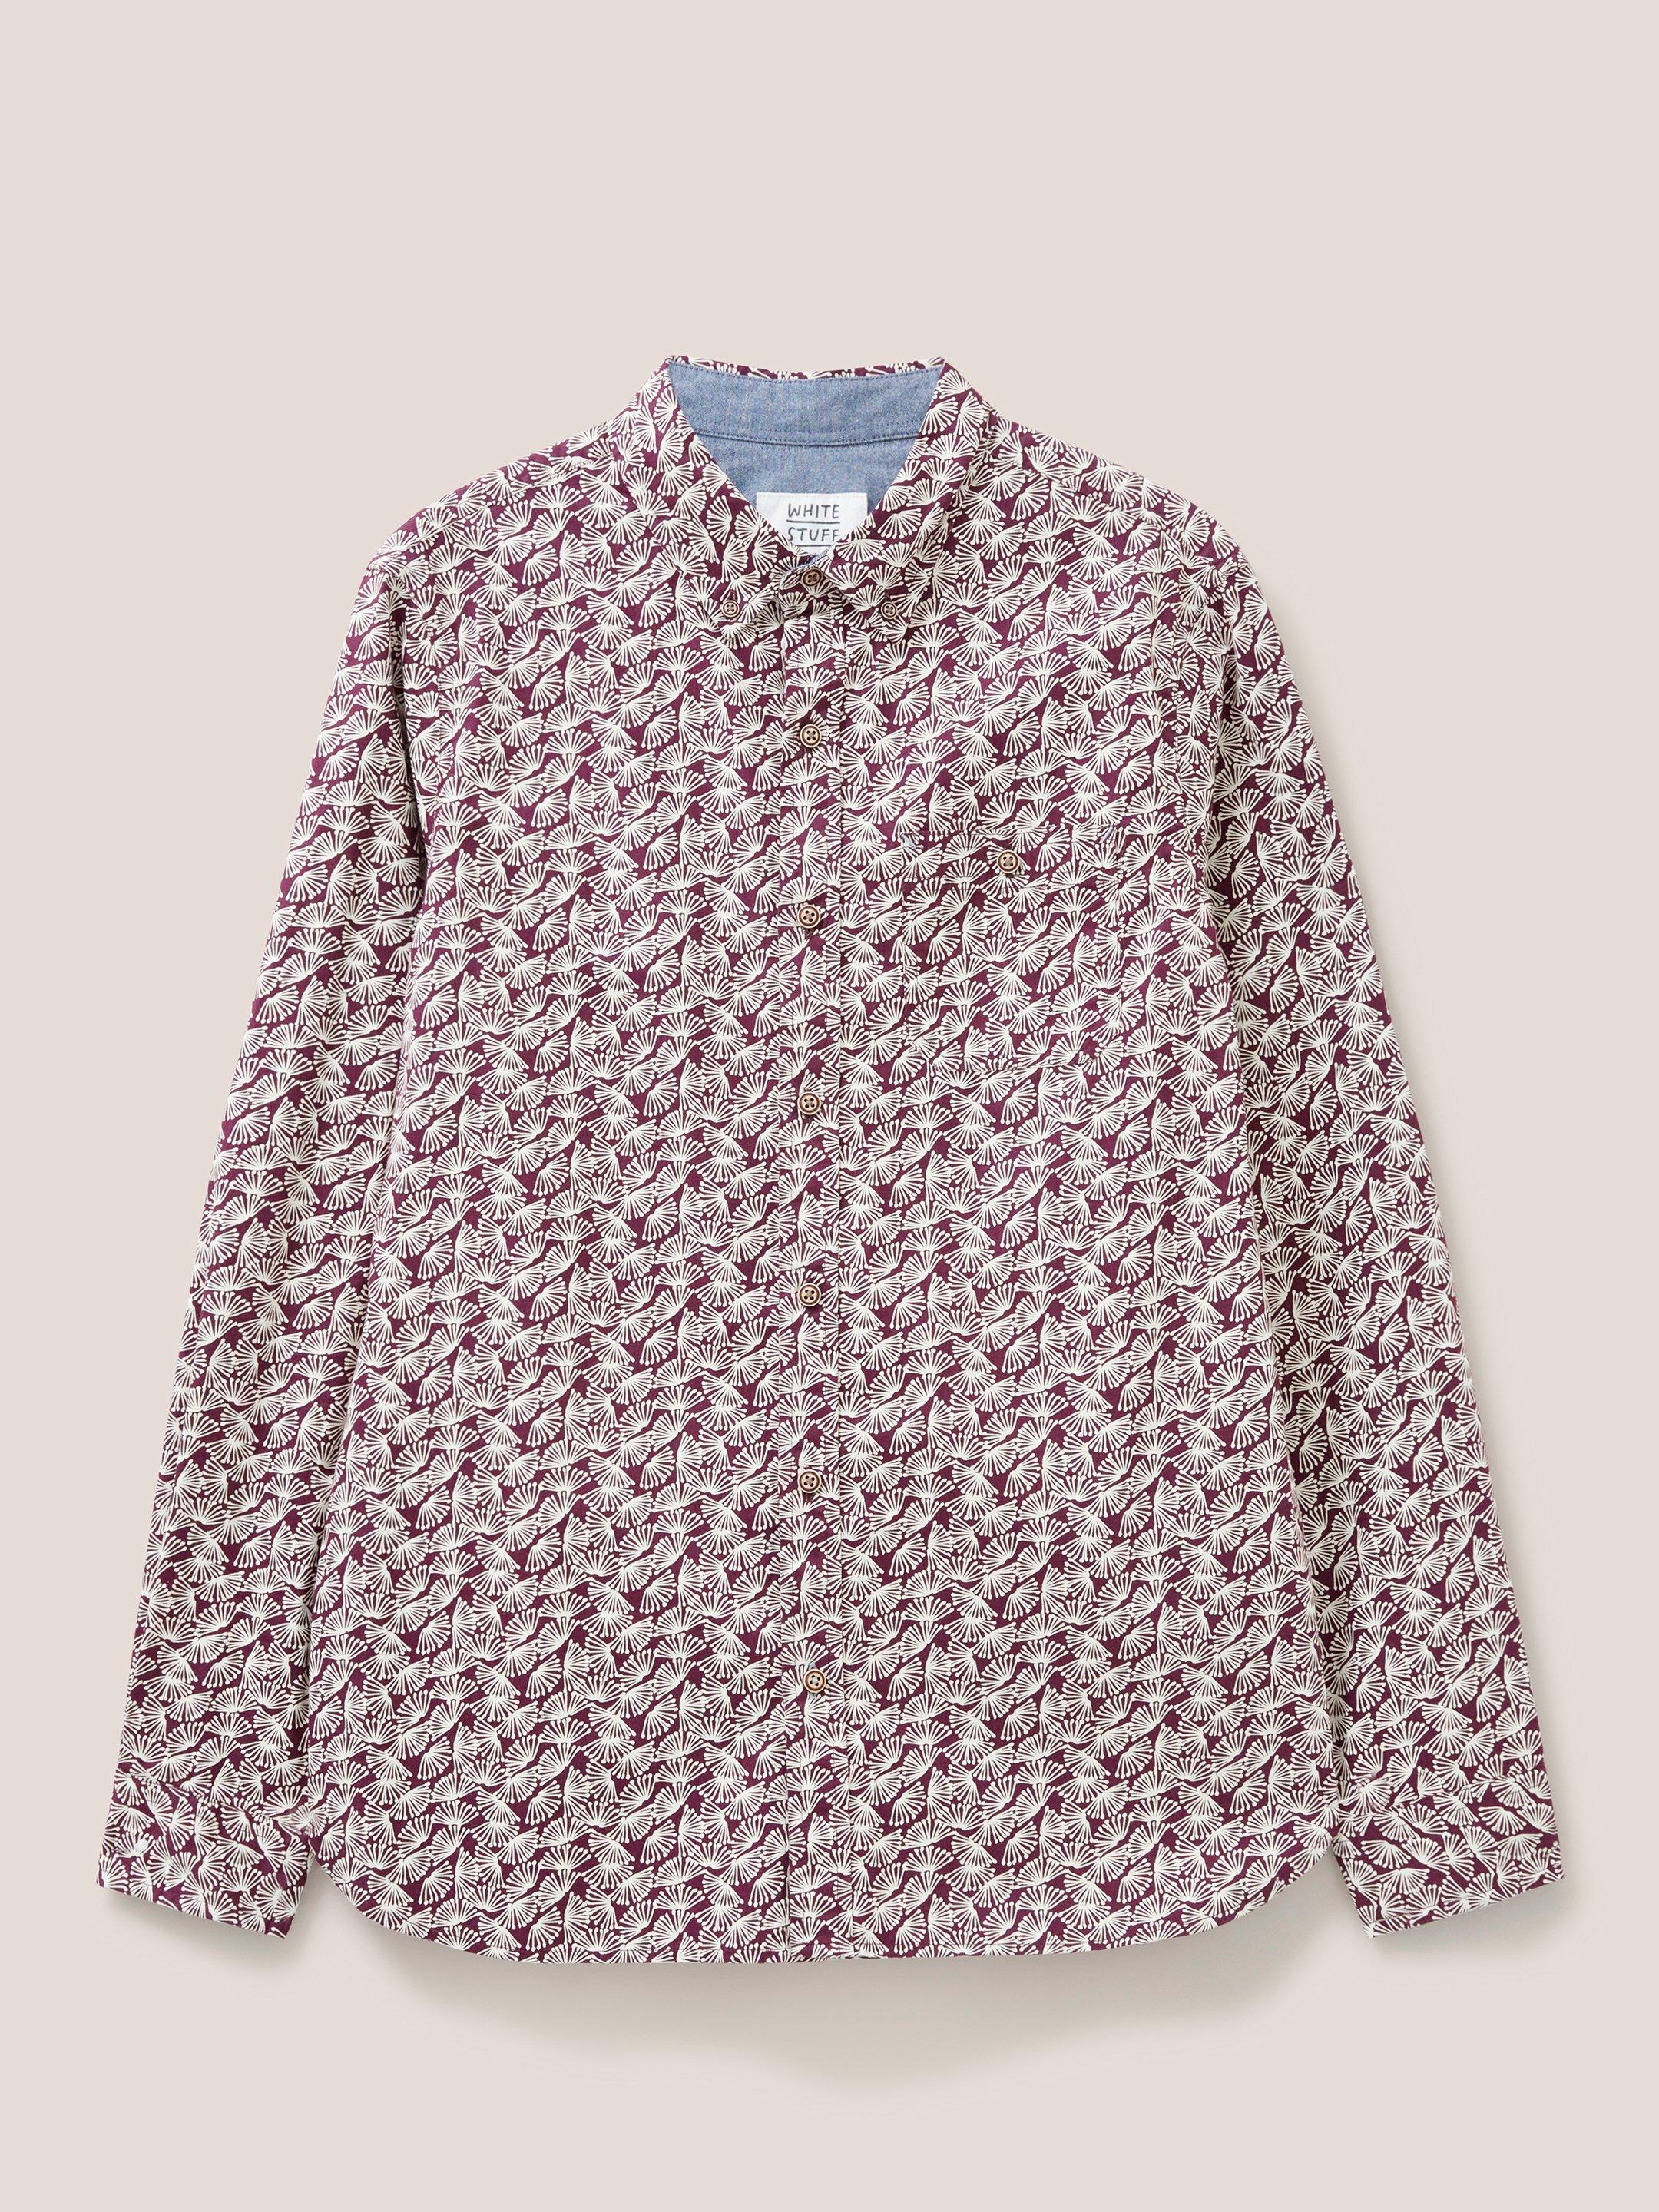 Dandelion Printed Shirt in DK PLUM - FLAT FRONT